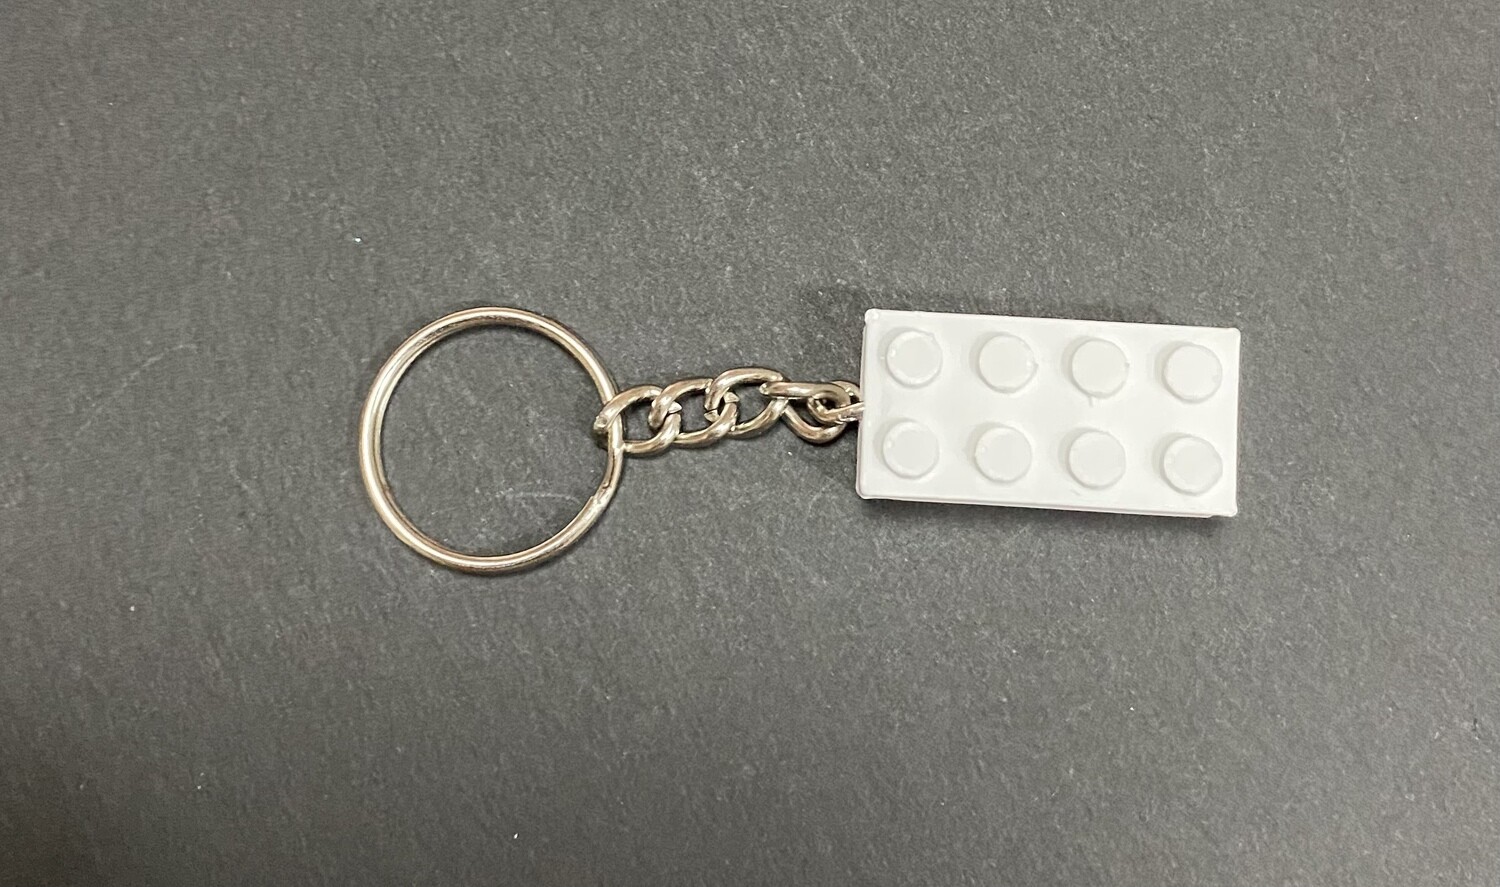 Brick key ring